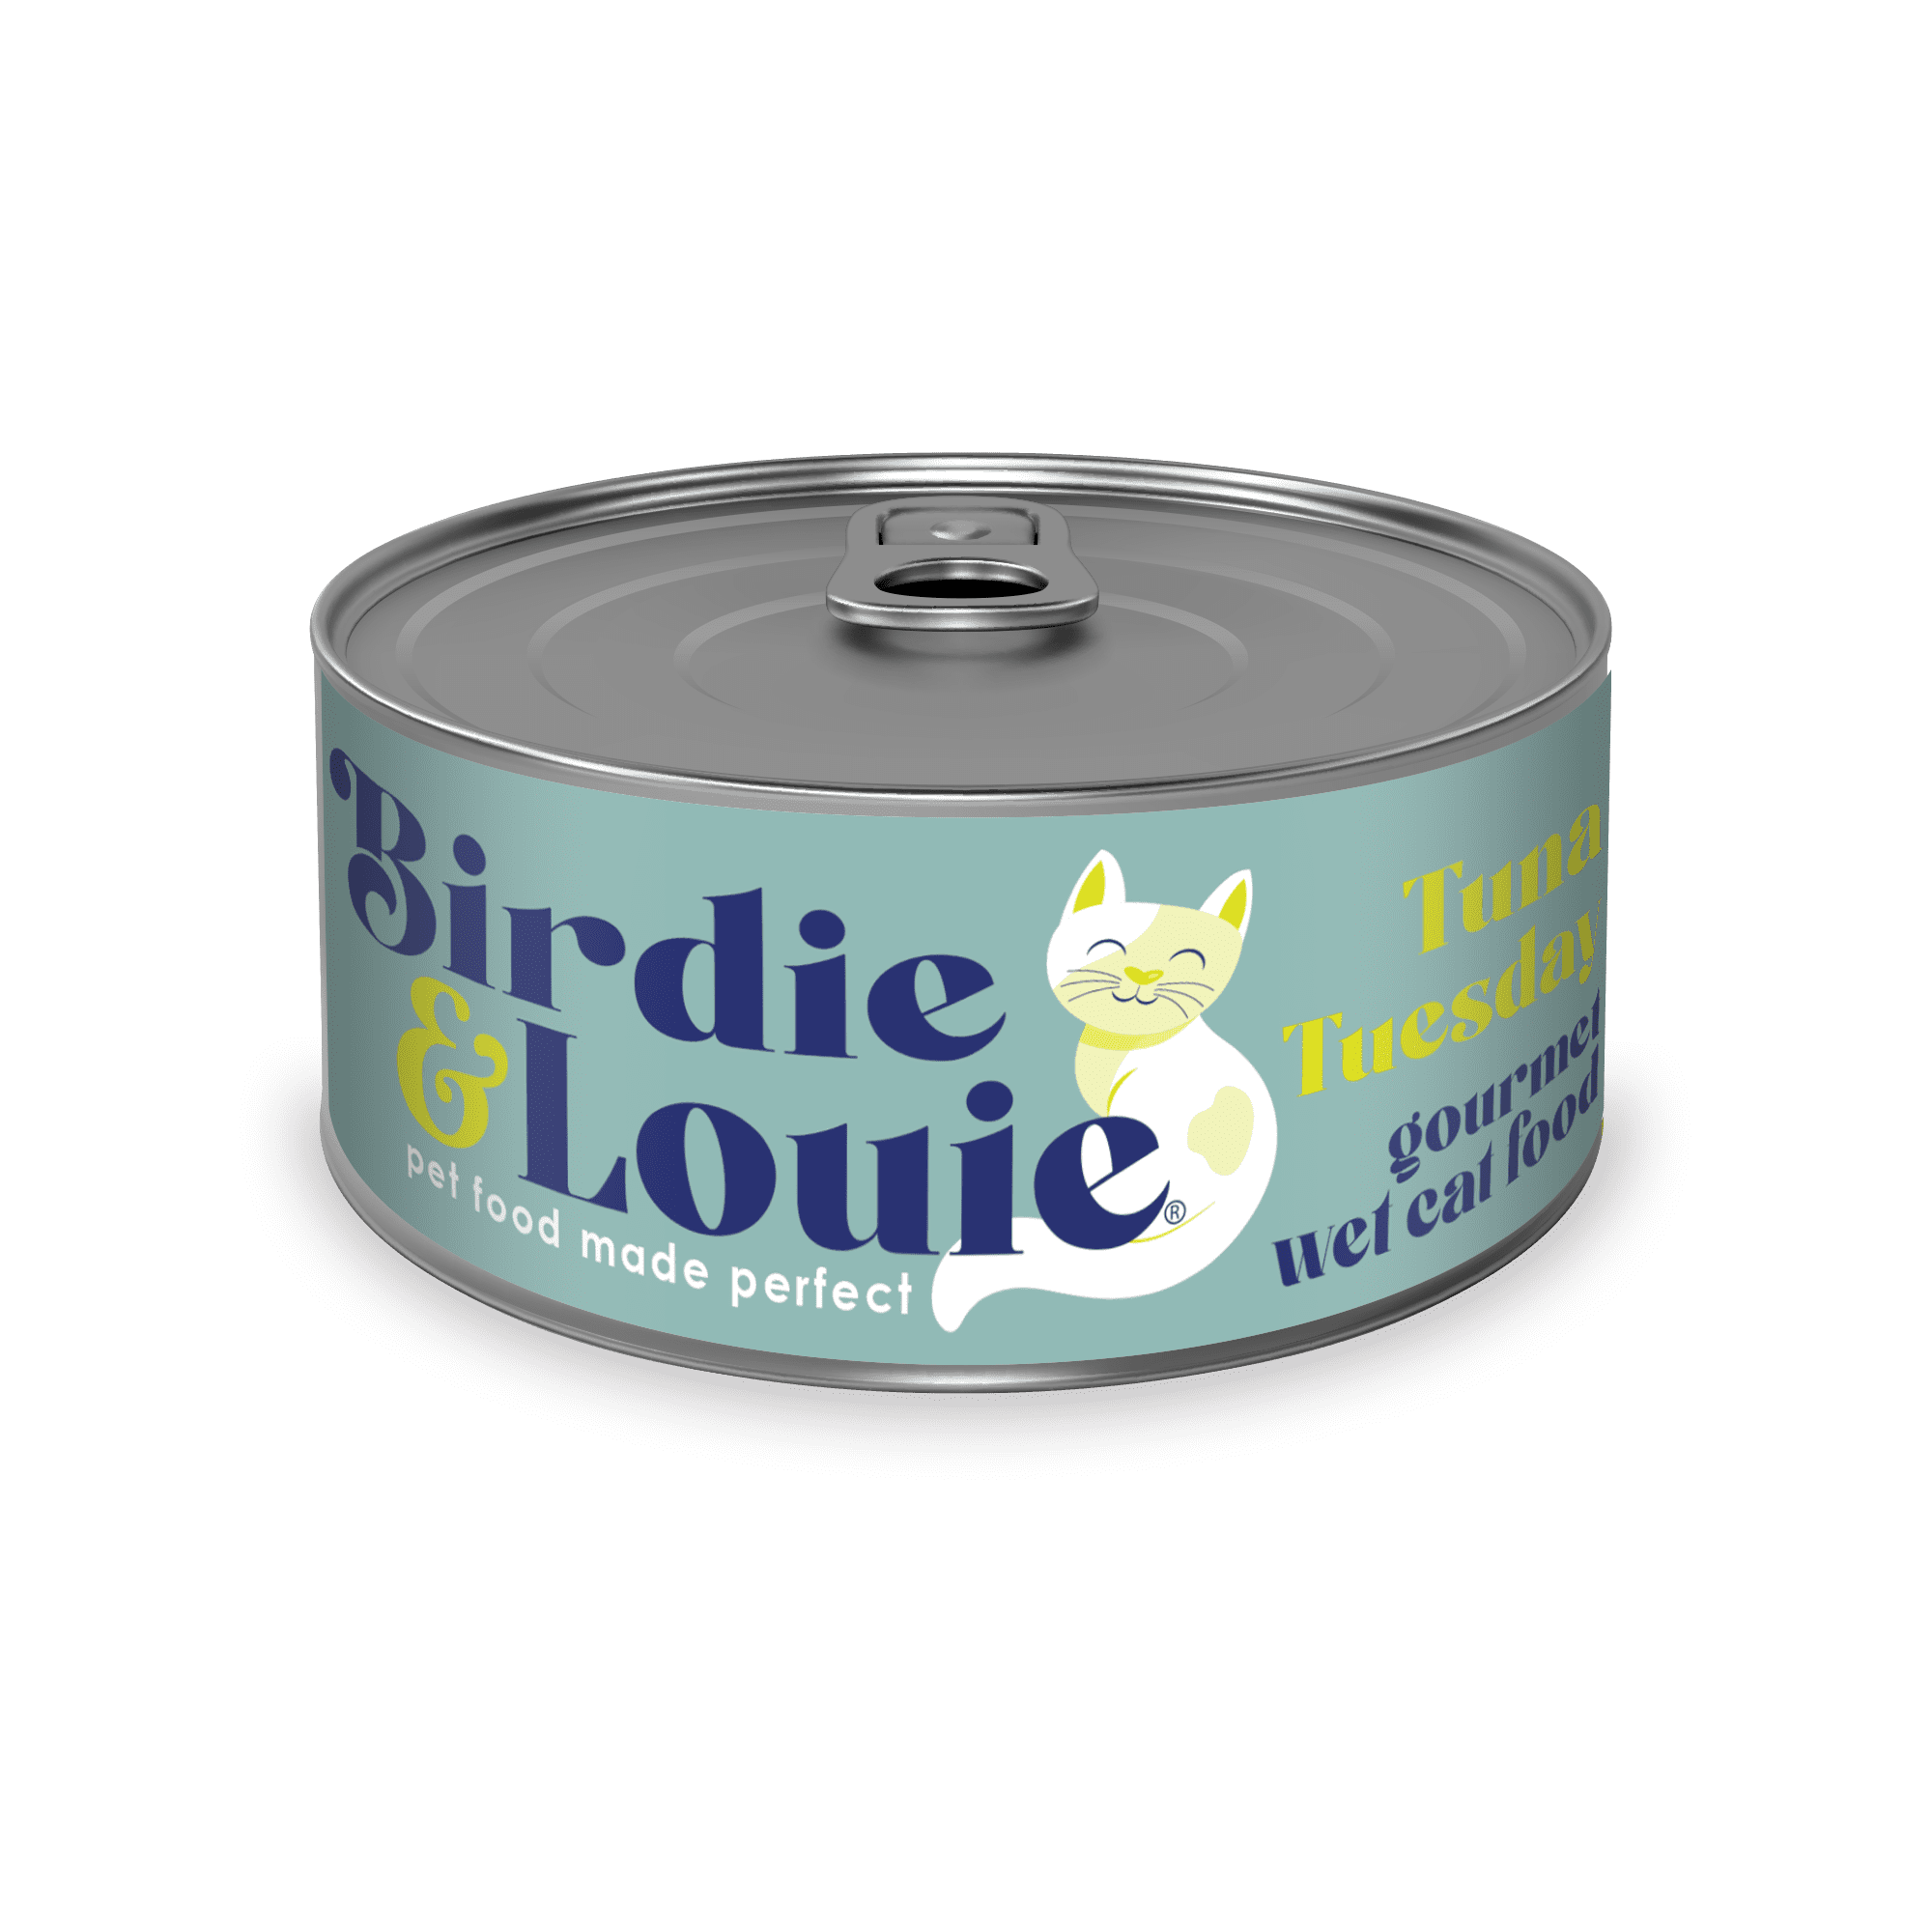 Birdie & Louie-Tuna Tuesdayno background